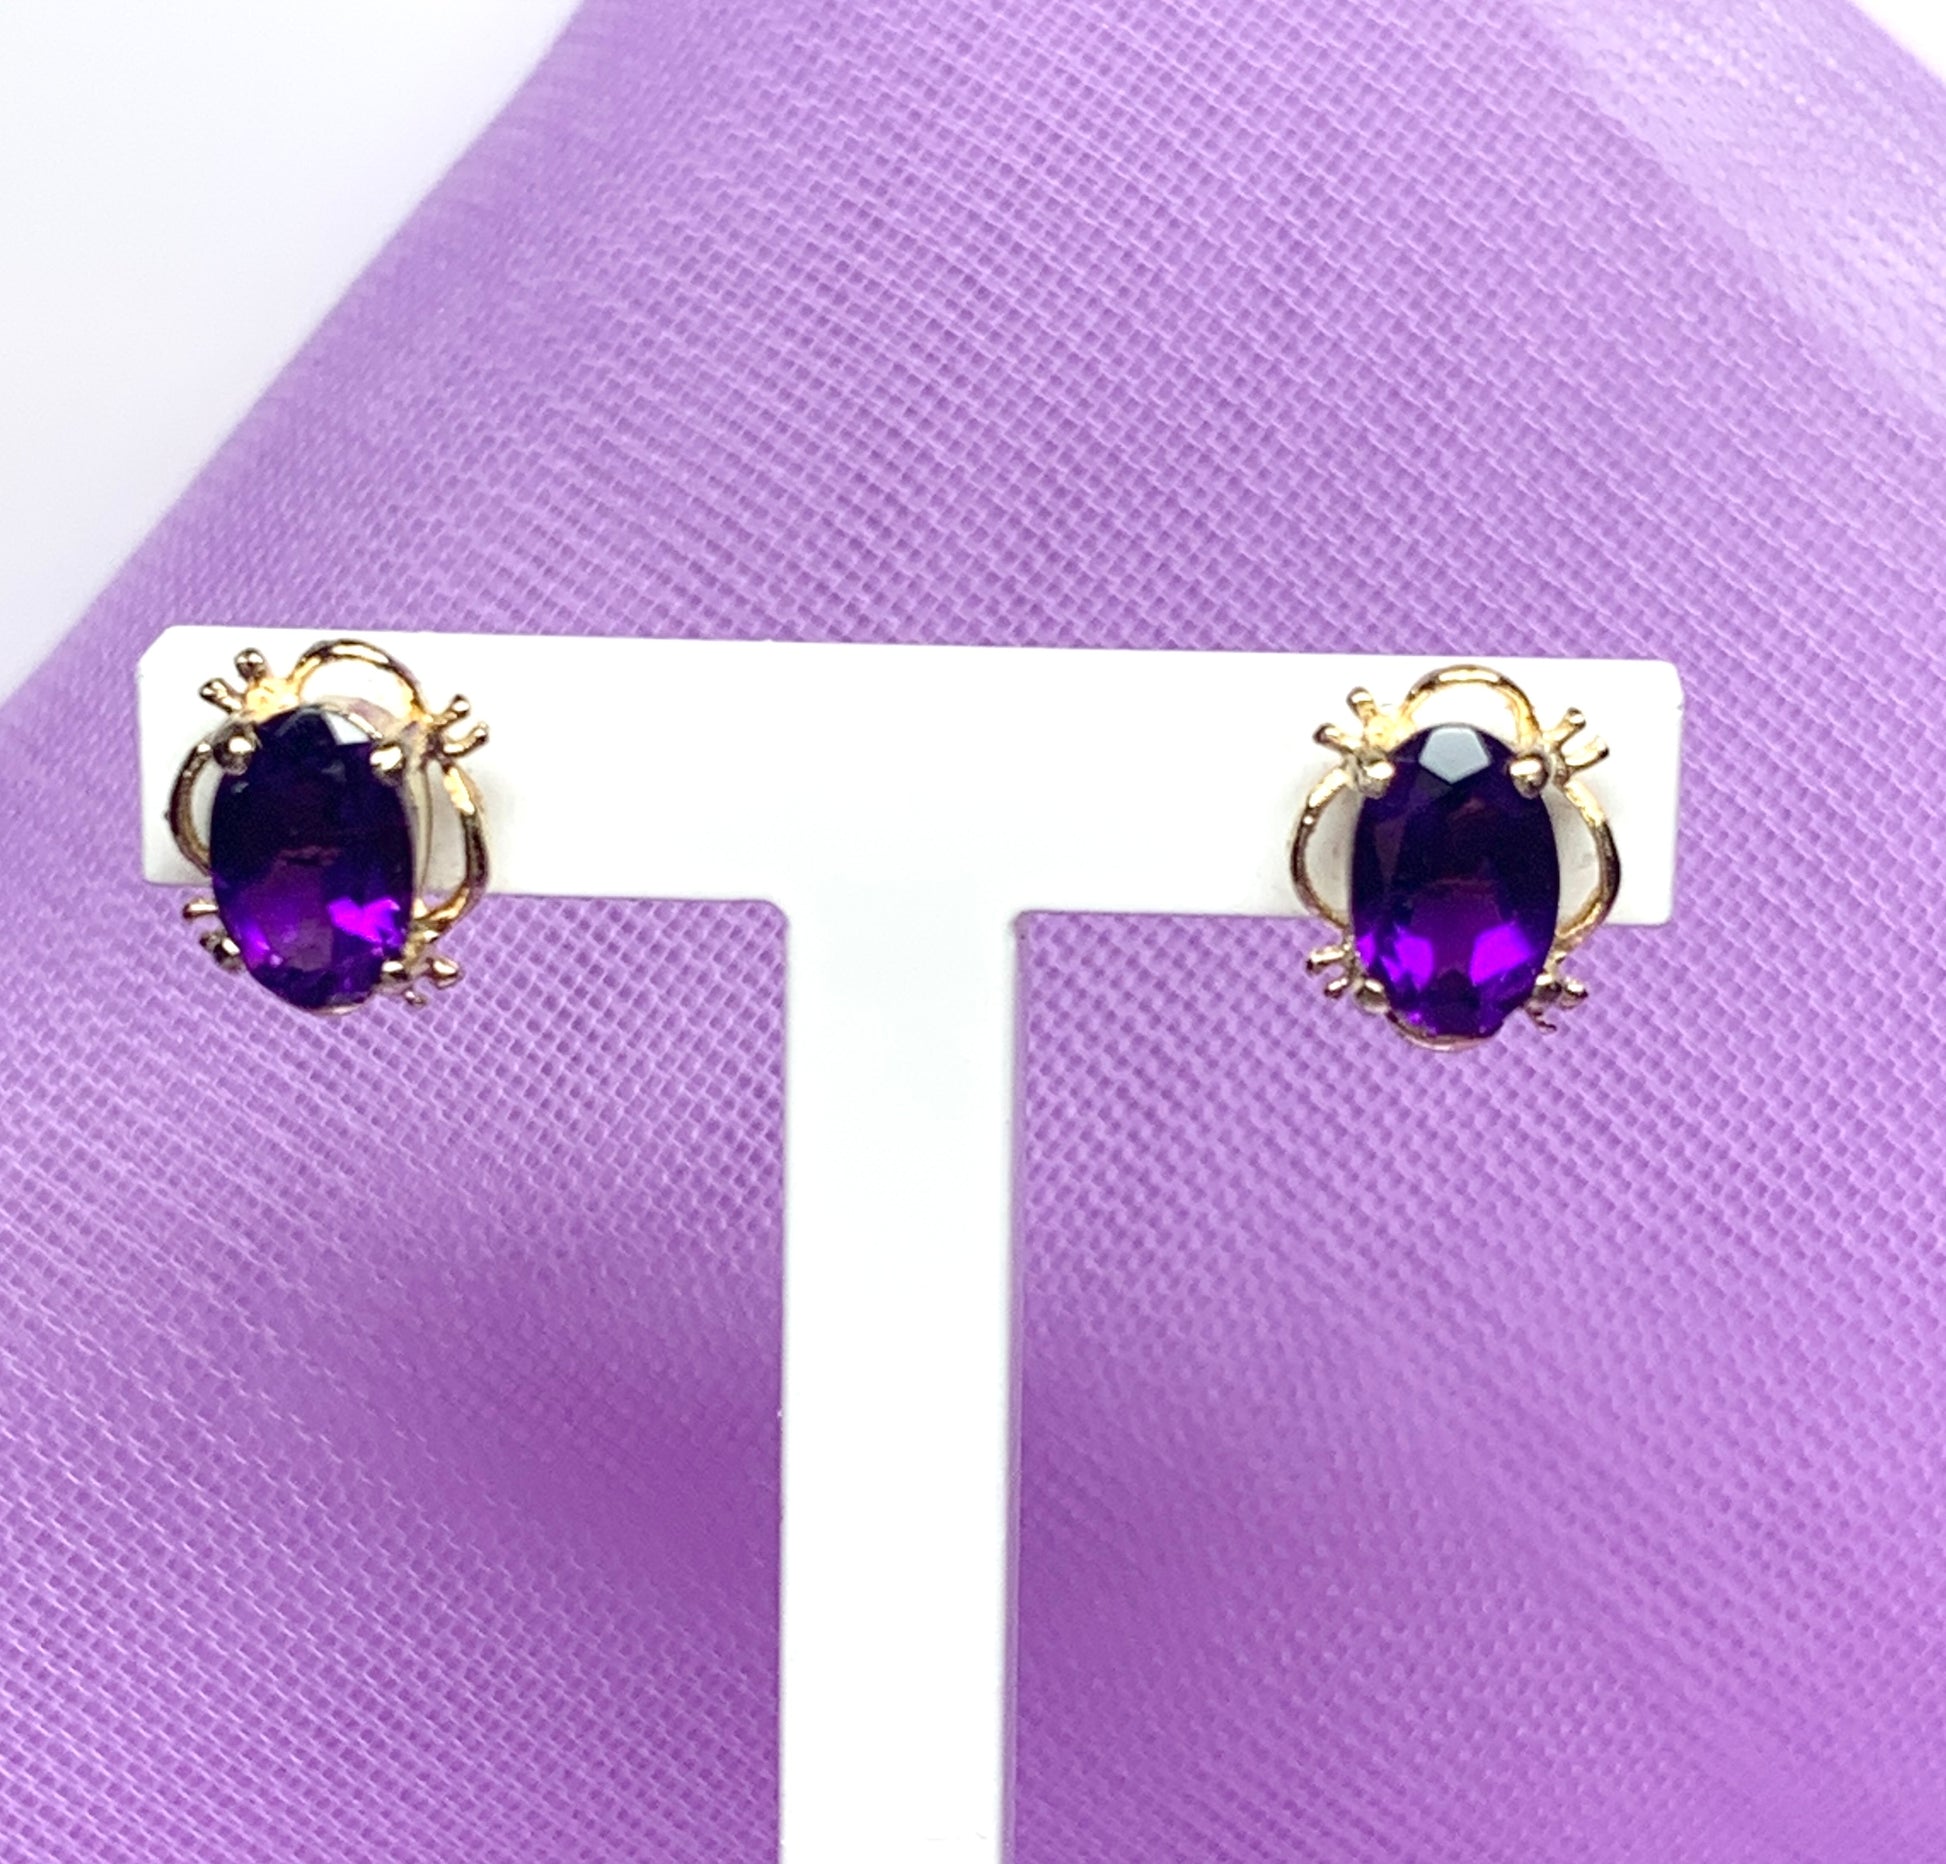 Yellow gold oval purple amethyst stud earrings with fancy edging